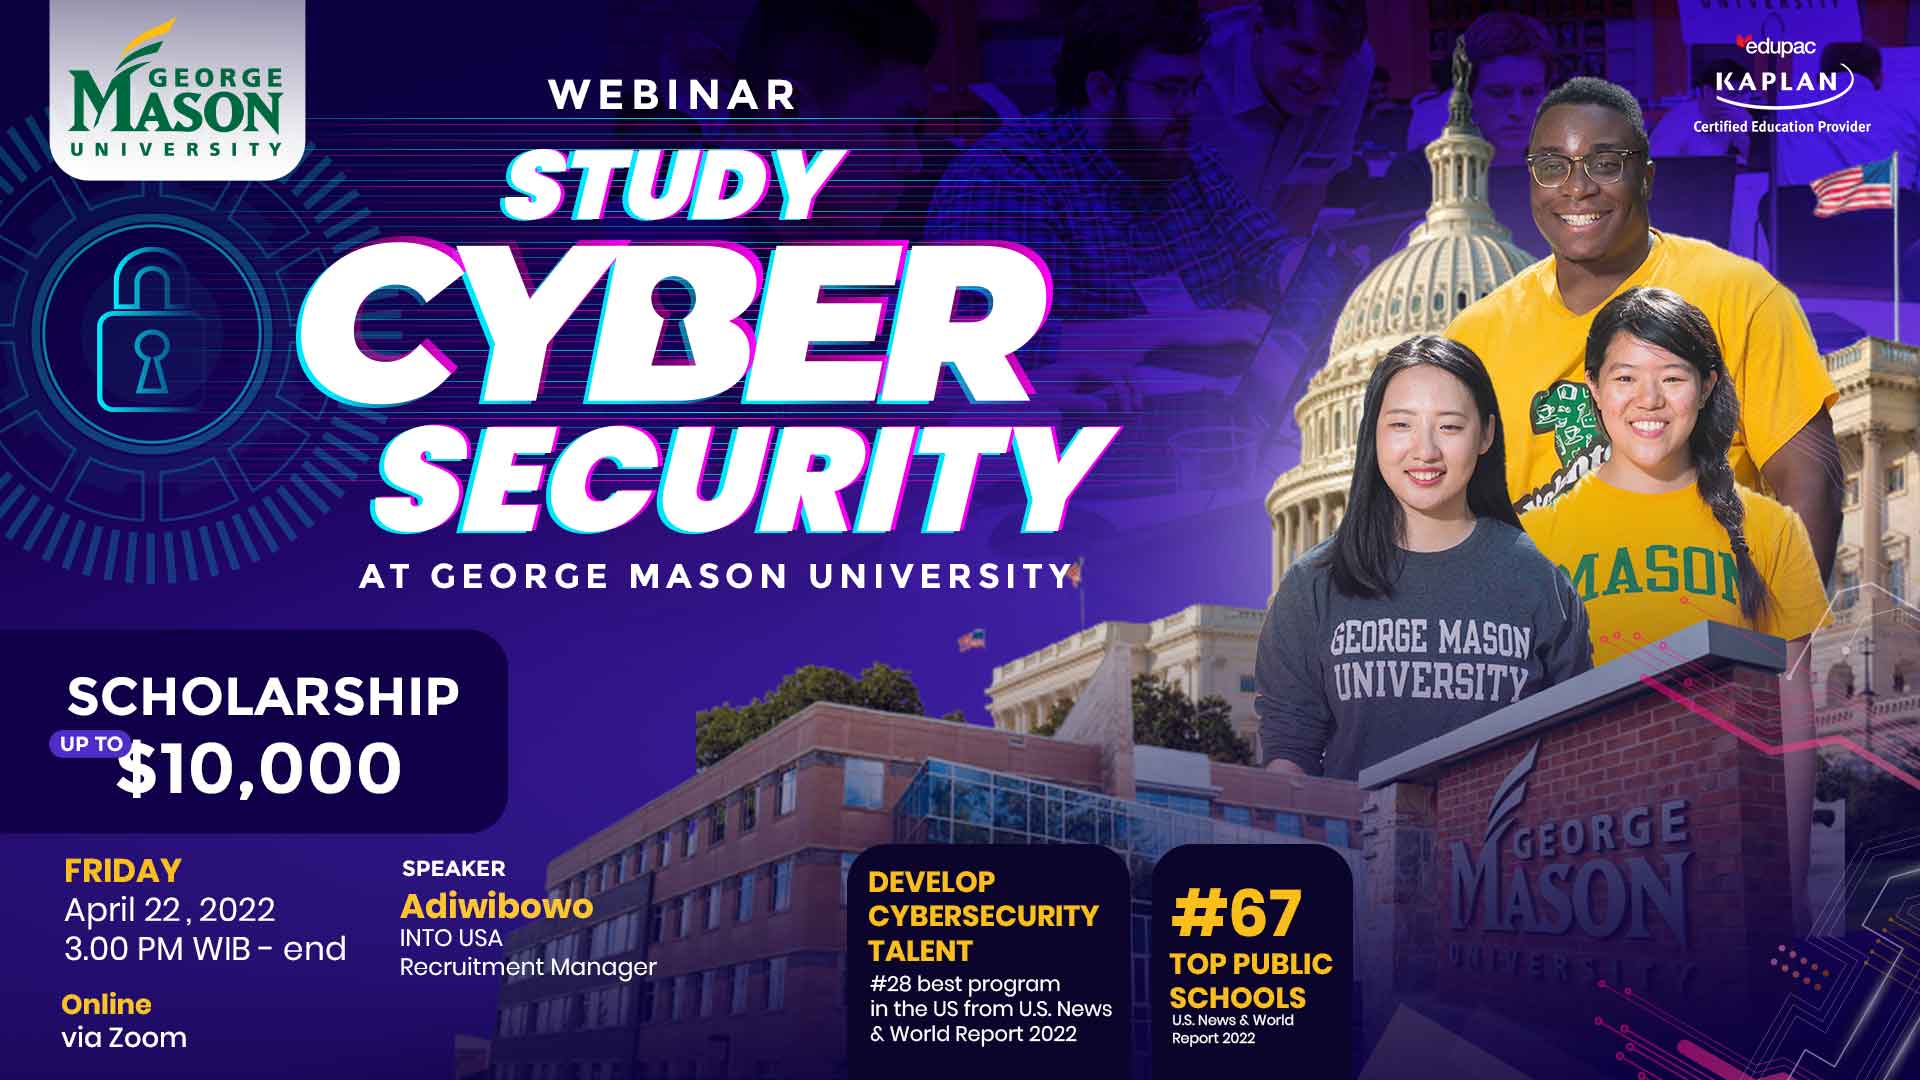 Free Webinar : Free Webinar "Study Cyber Security at George Mason University" 